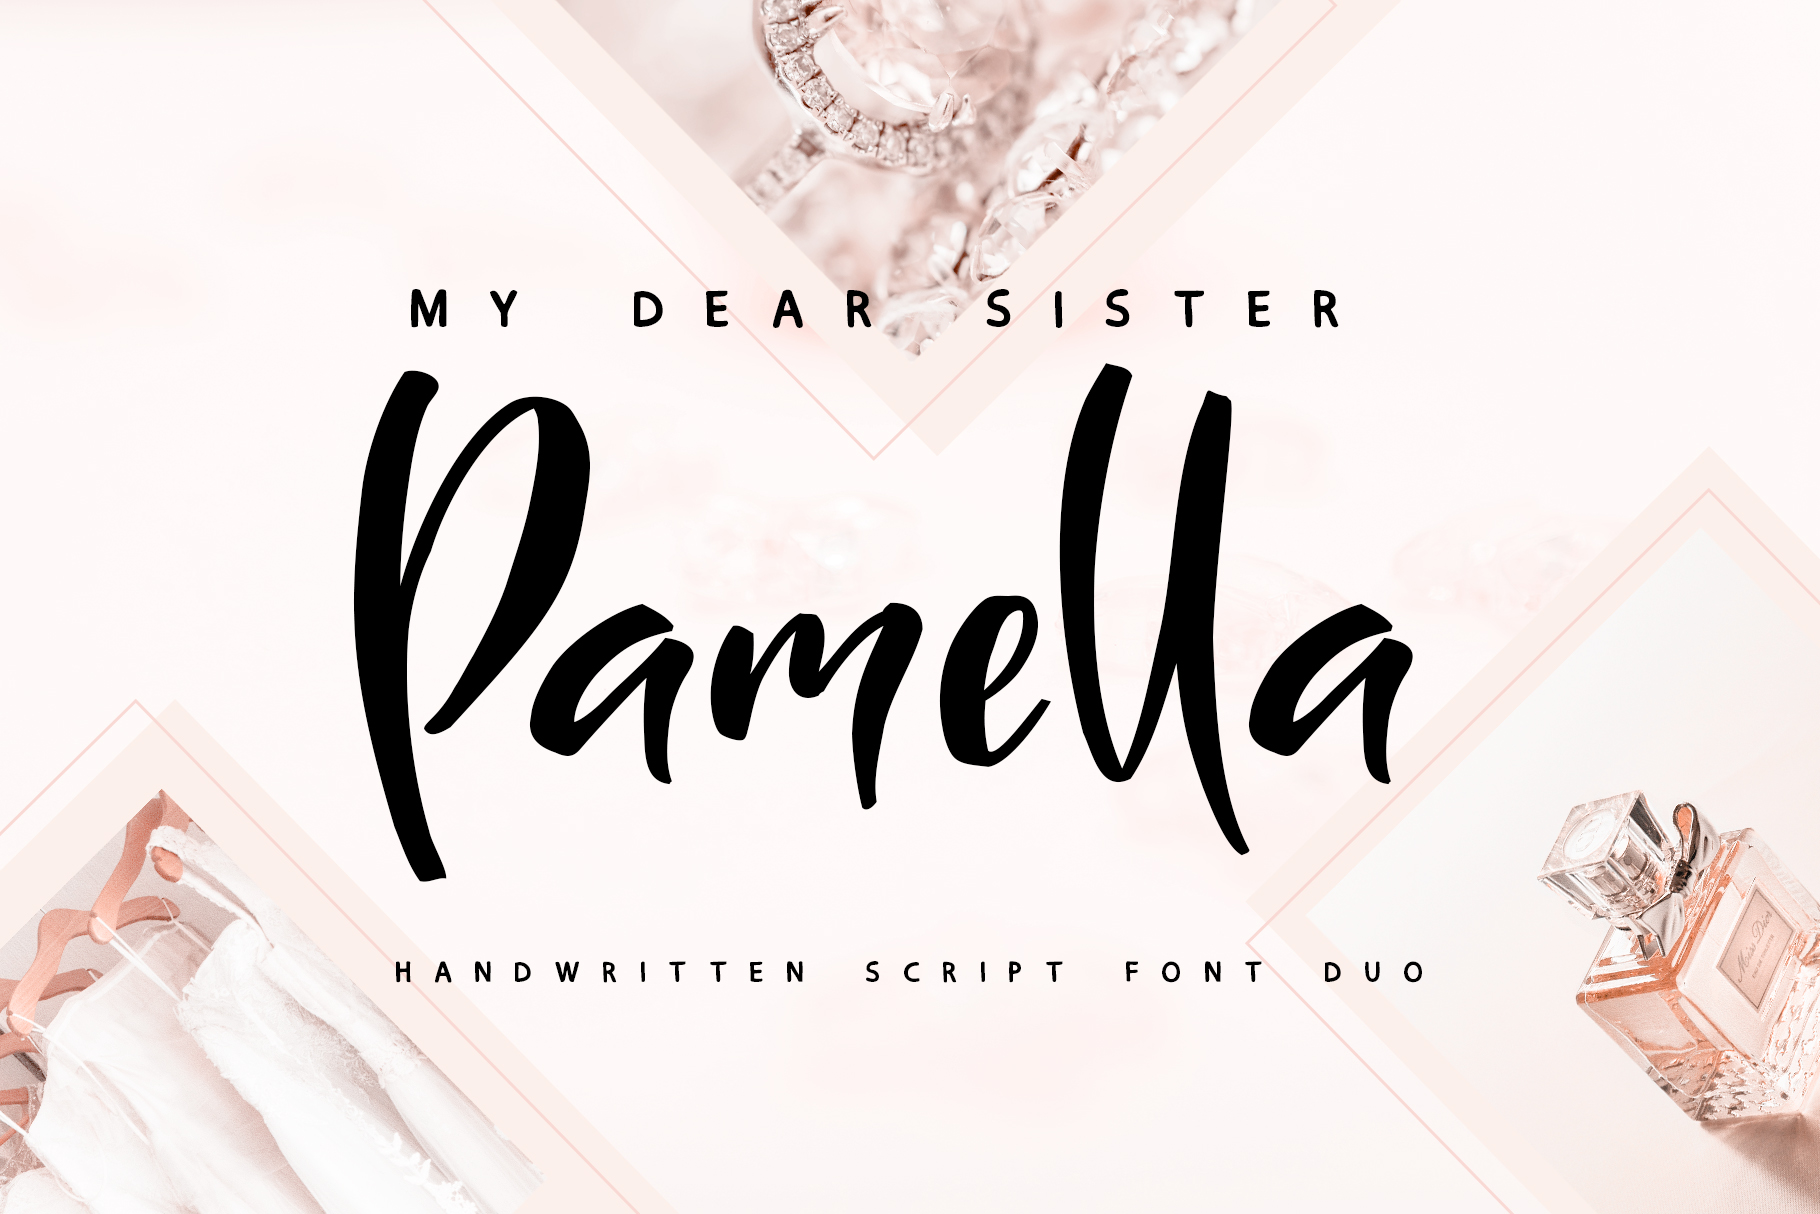 Sister Pamella Font